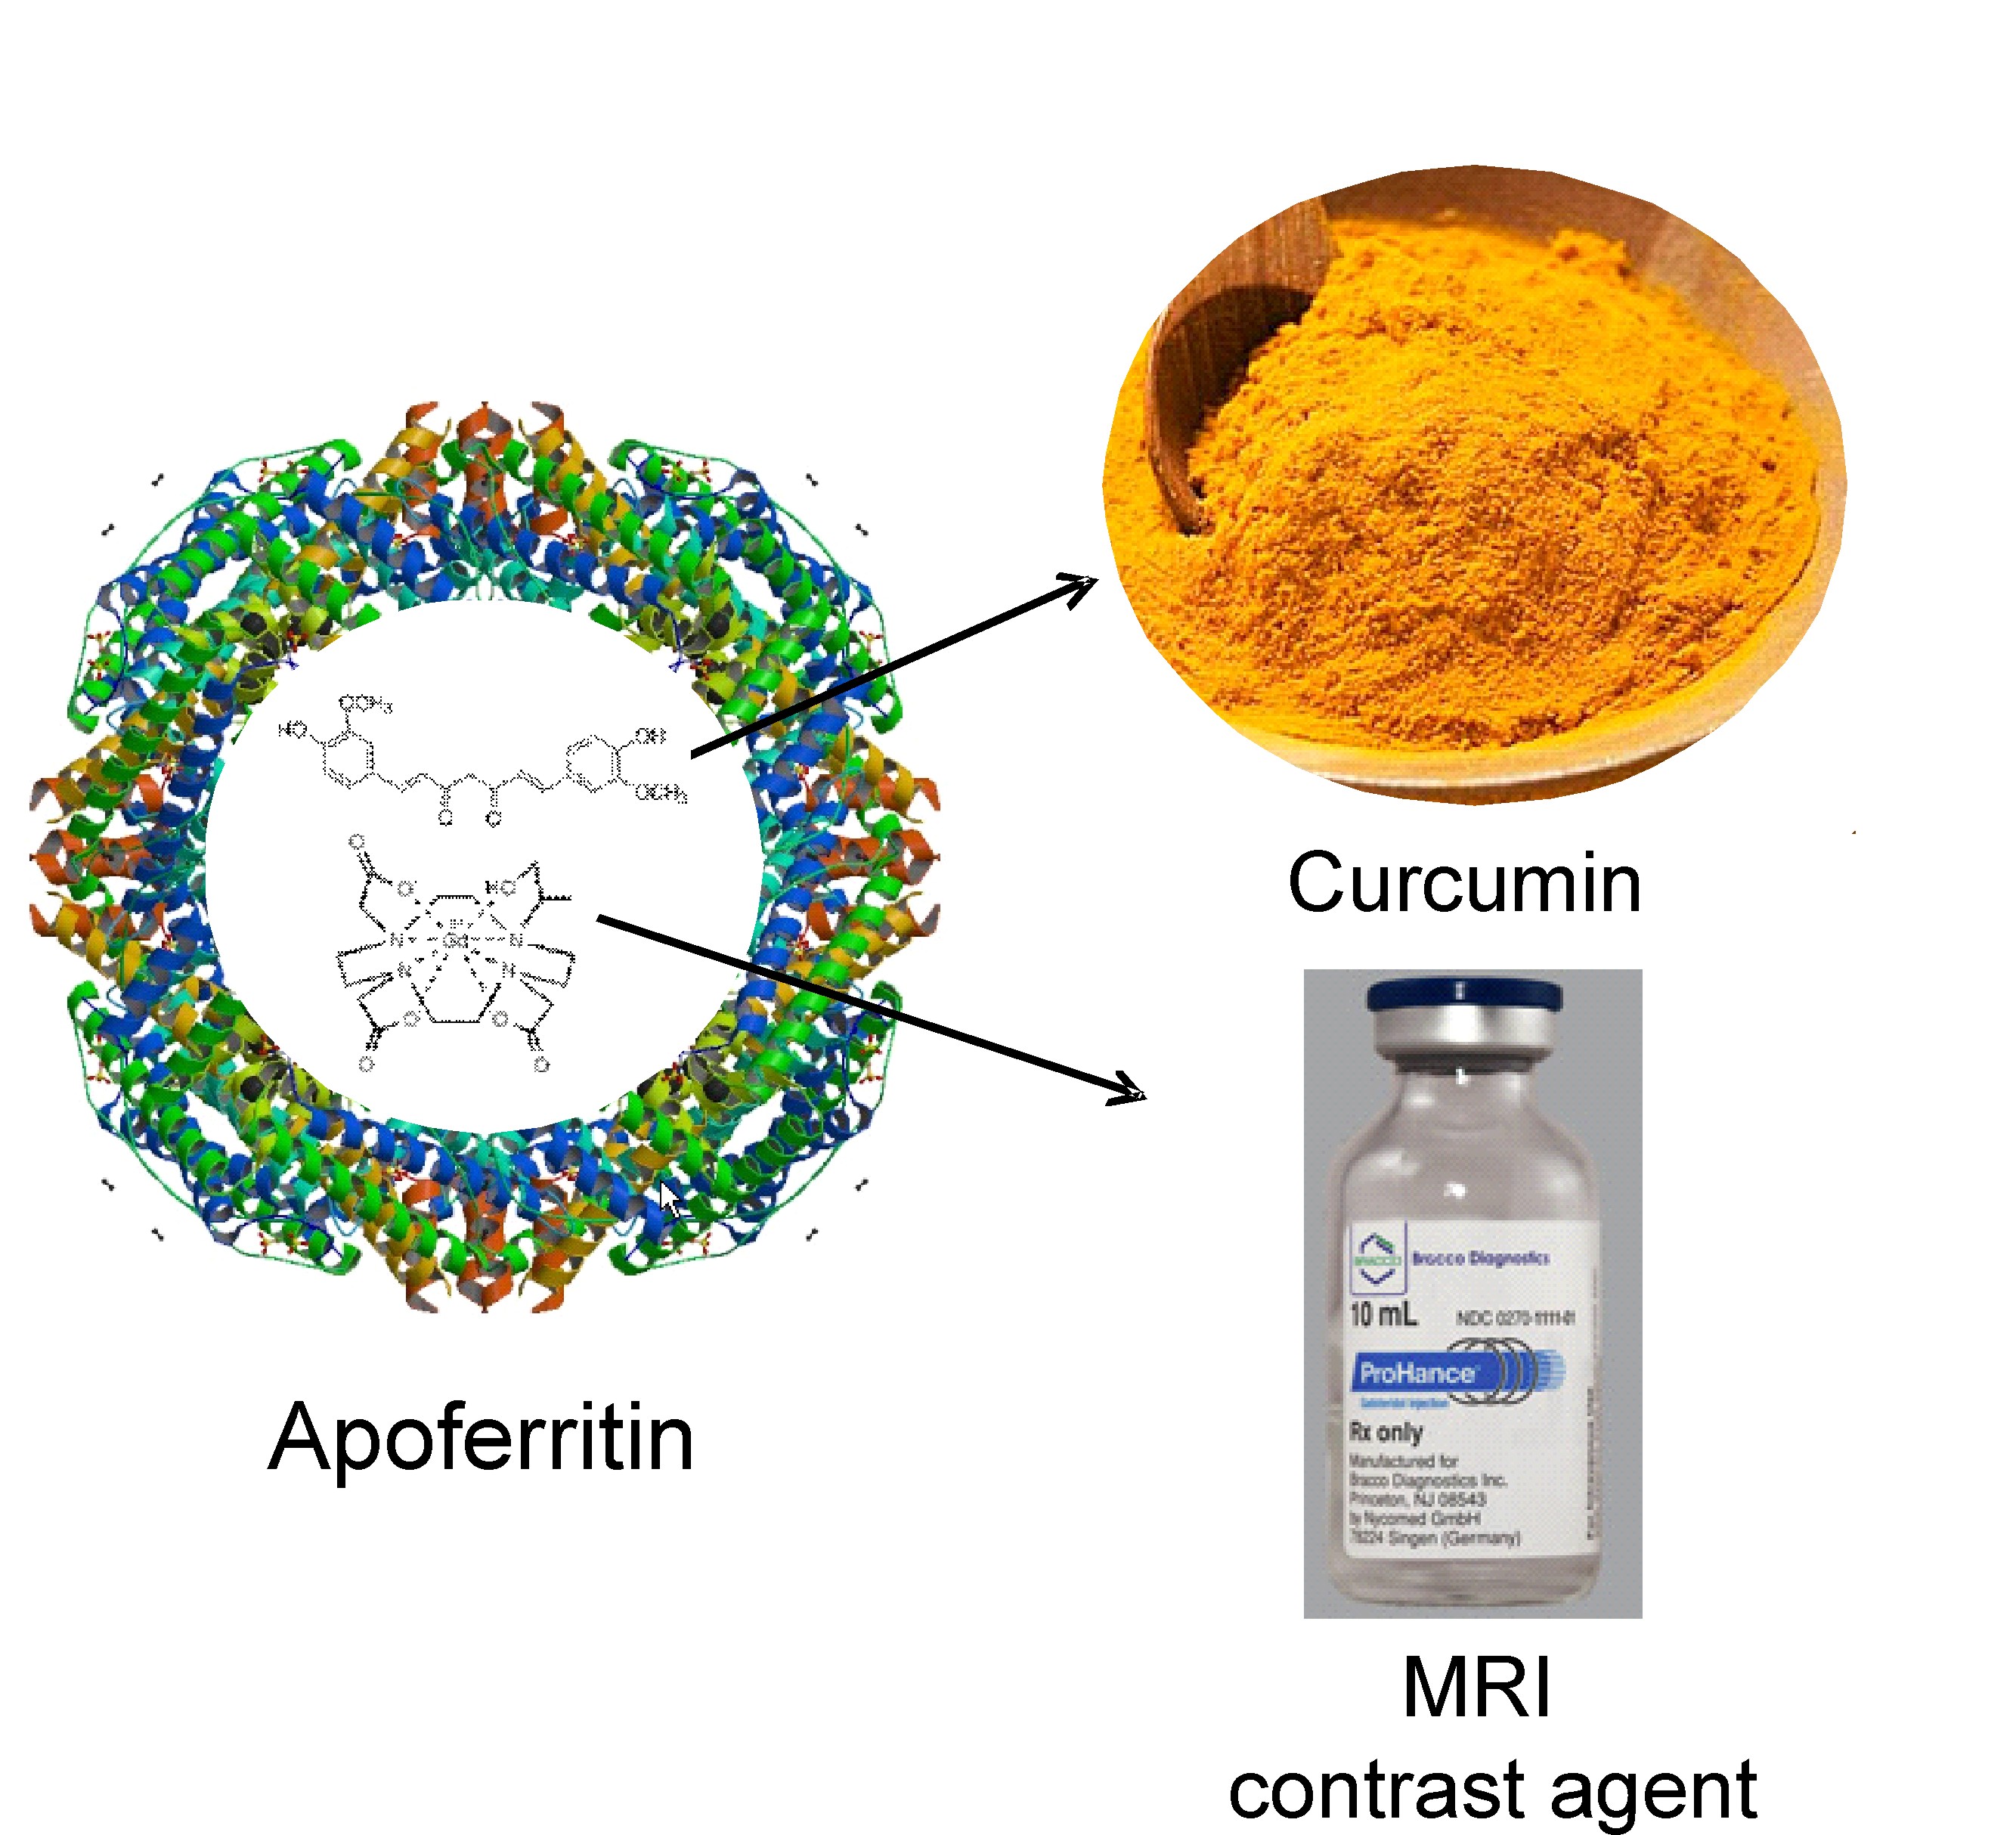 Curcumin and Gd loaded apoferritin